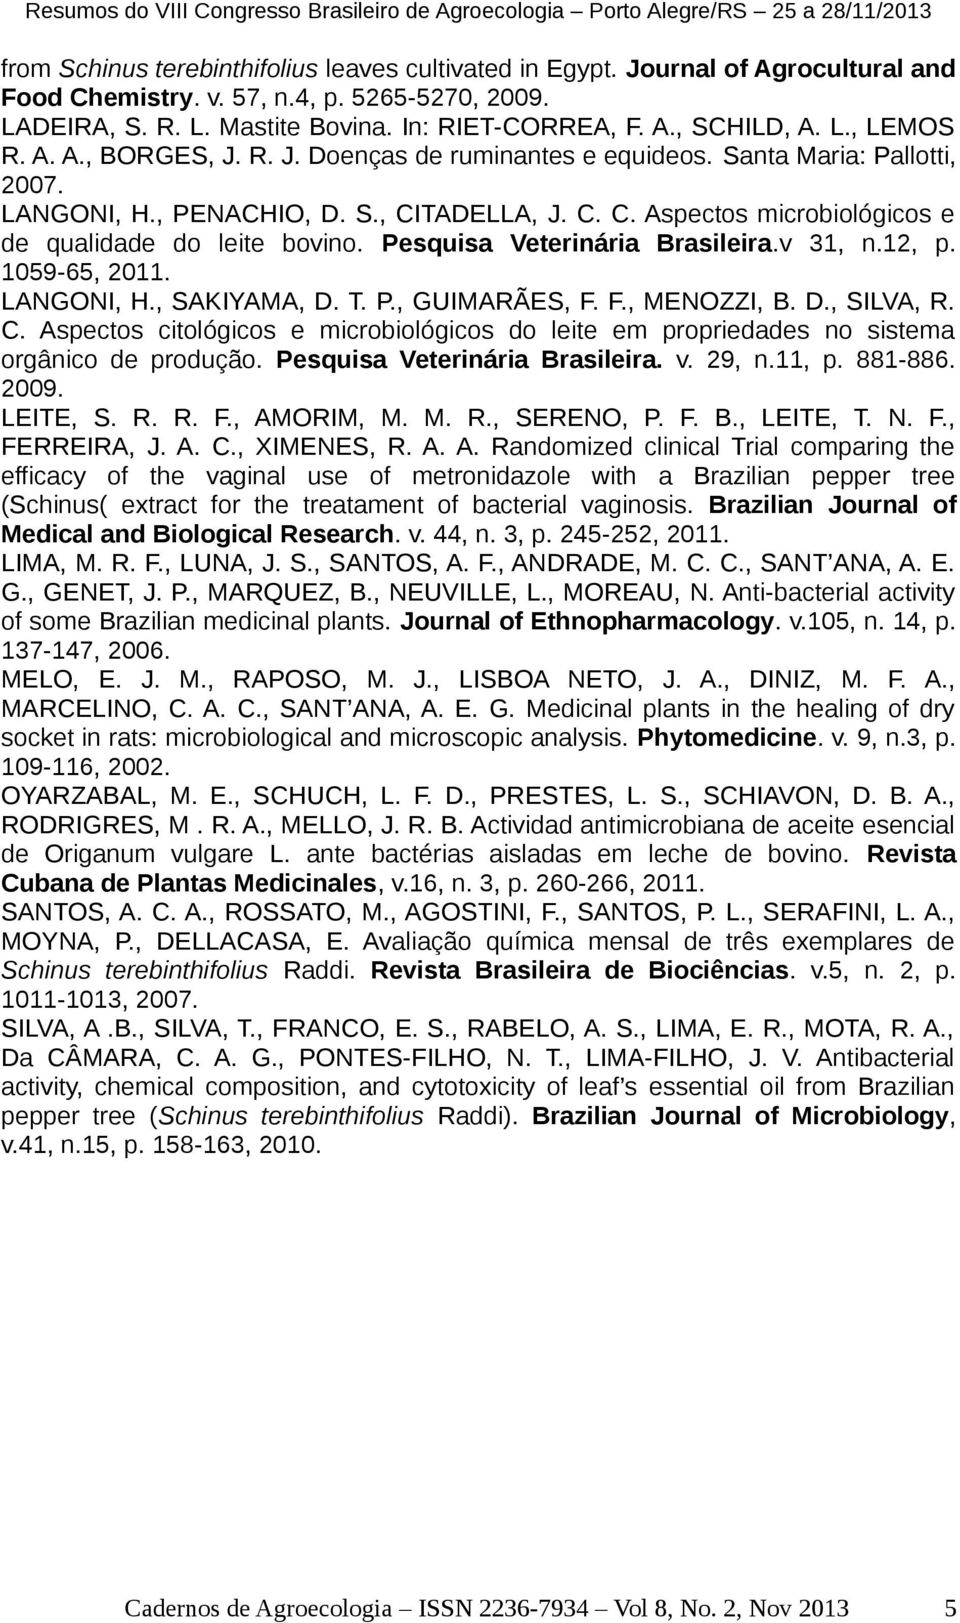 Pesquisa Veterinária Brasileira.v 31, n.12, p. 1059-65, 2011. LANGONI, H., SAKIYAMA, D. T. P., GUIMARÃES, F. F., MENOZZI, B. D., SILVA, R. C.